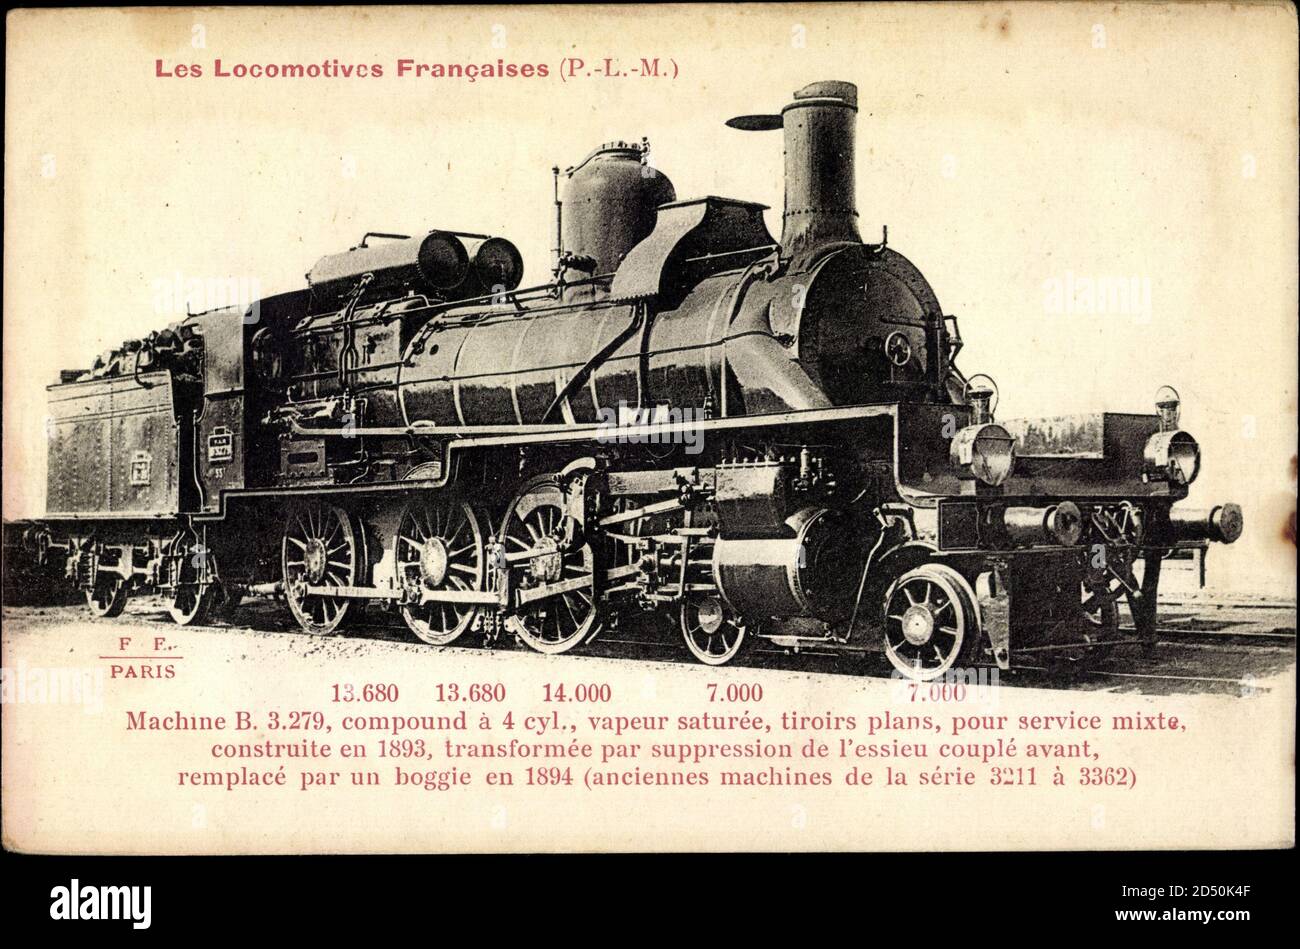 Locomotives Francaises, P.L.M, Machine B 3279 | usage worldwide Stock Photo